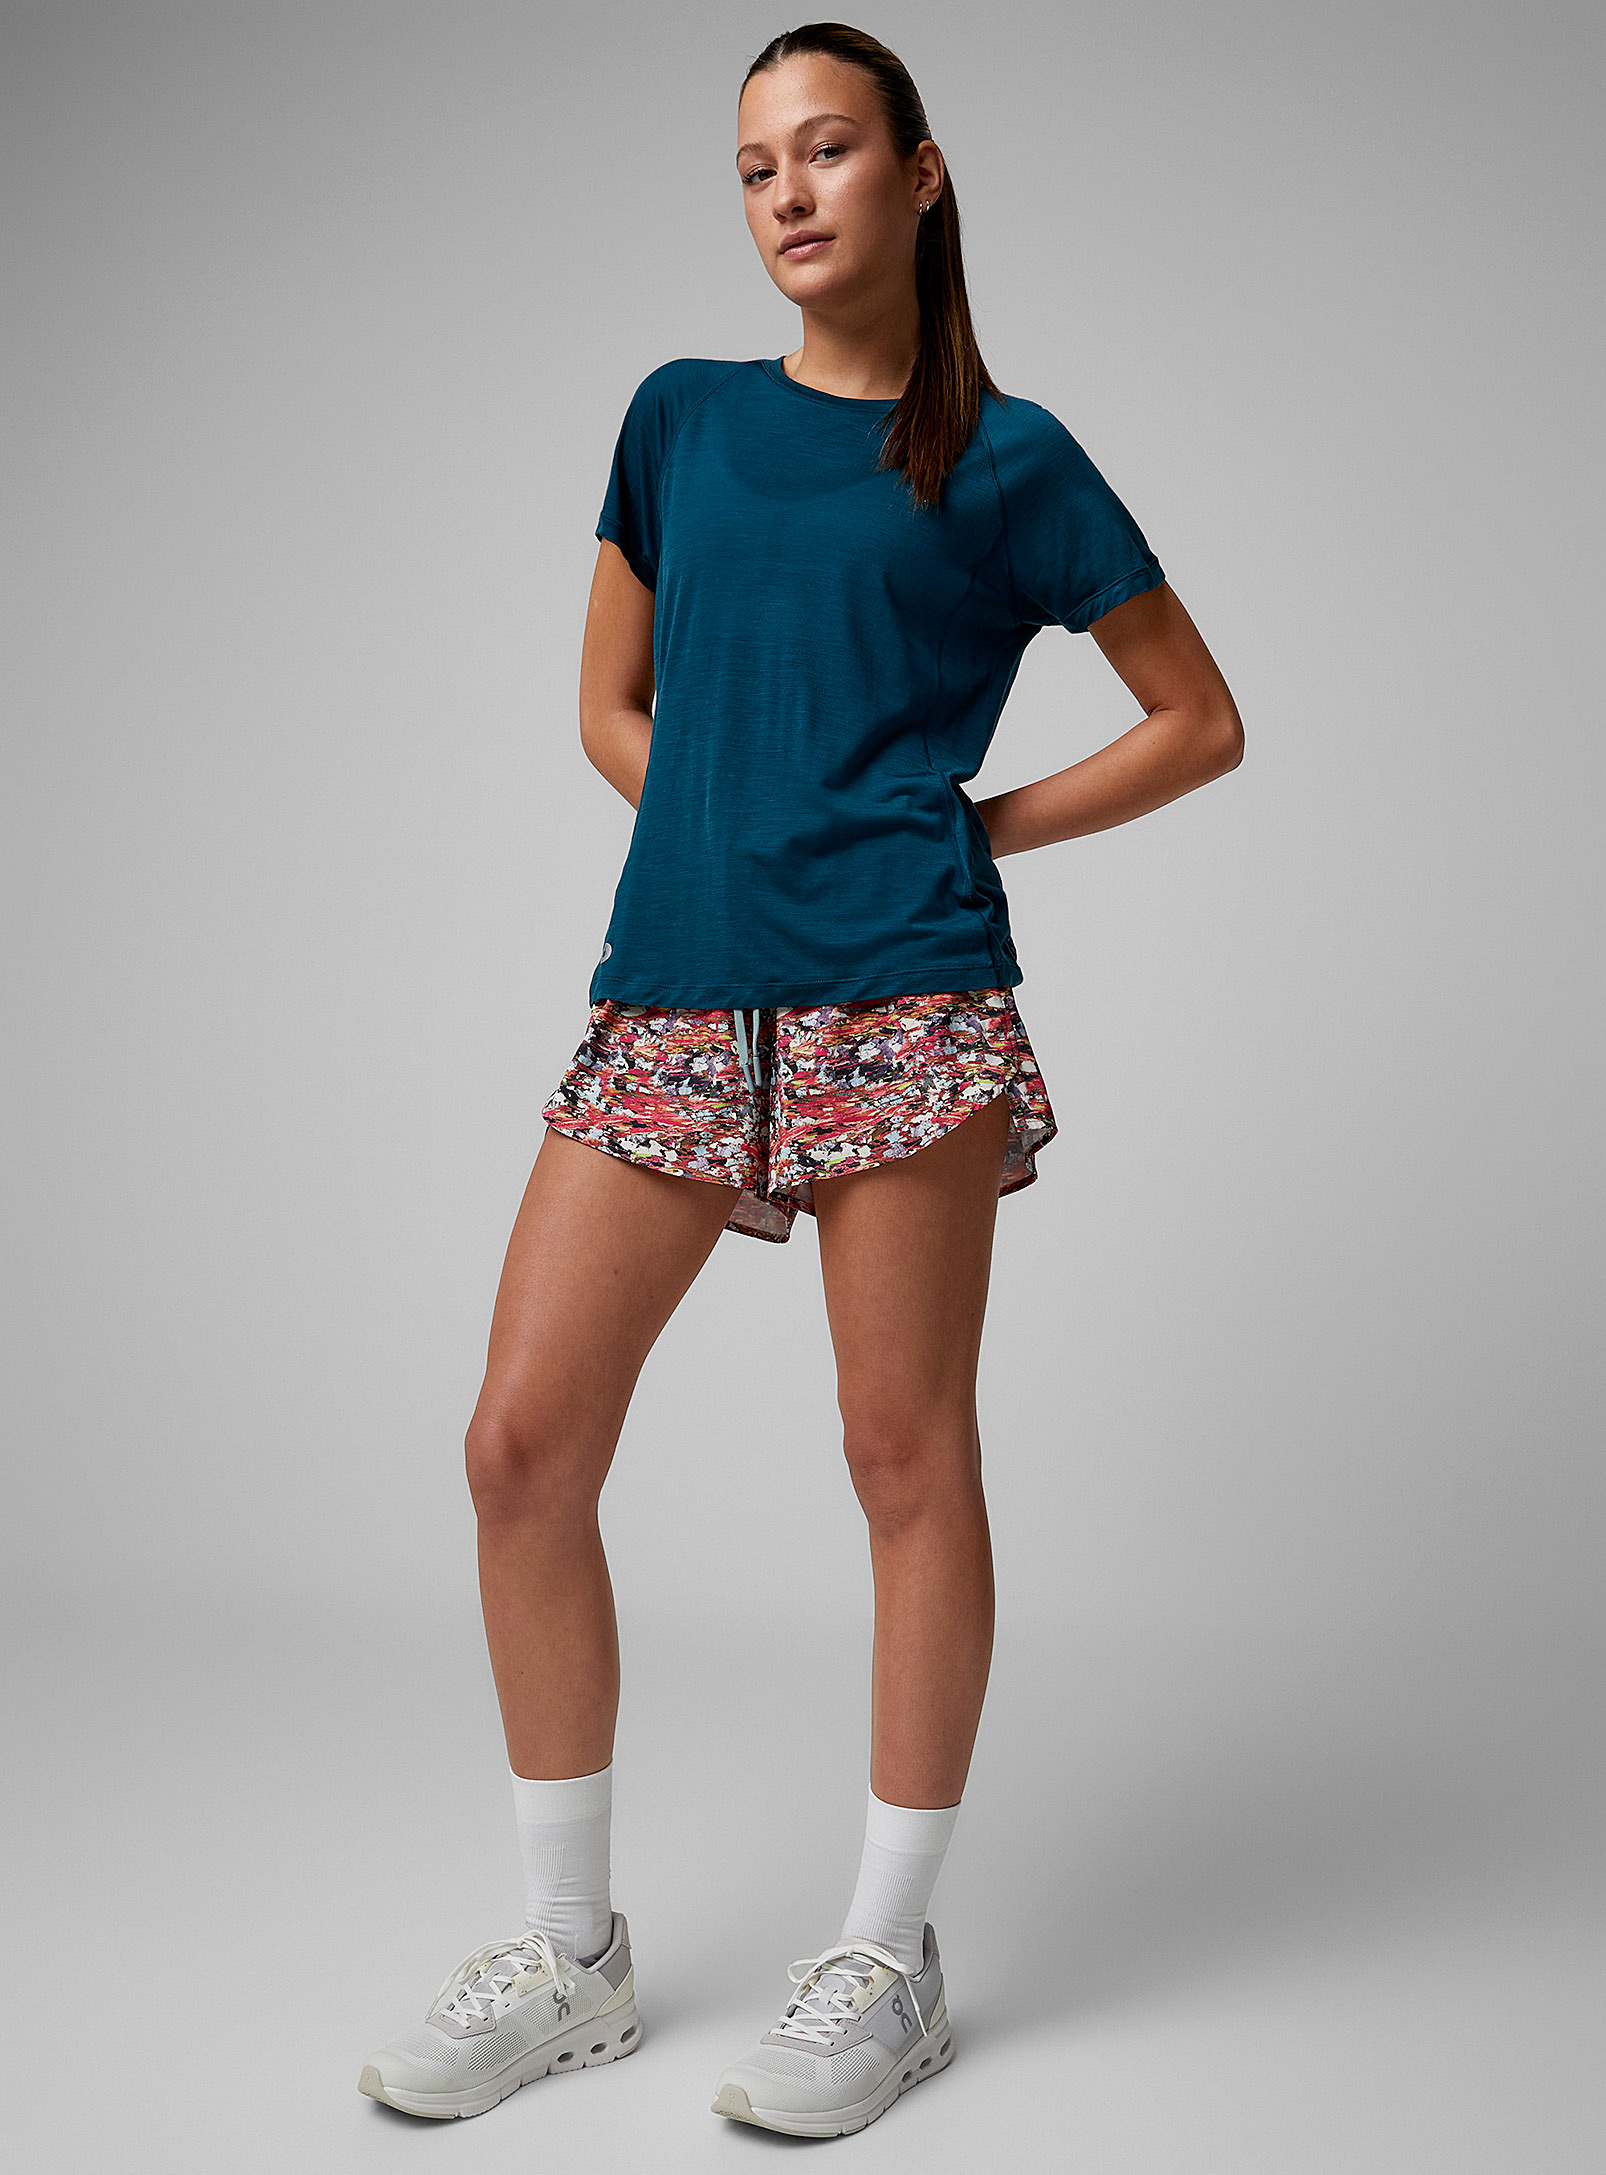 Smartwool - Women's Hazy print merino-panty short